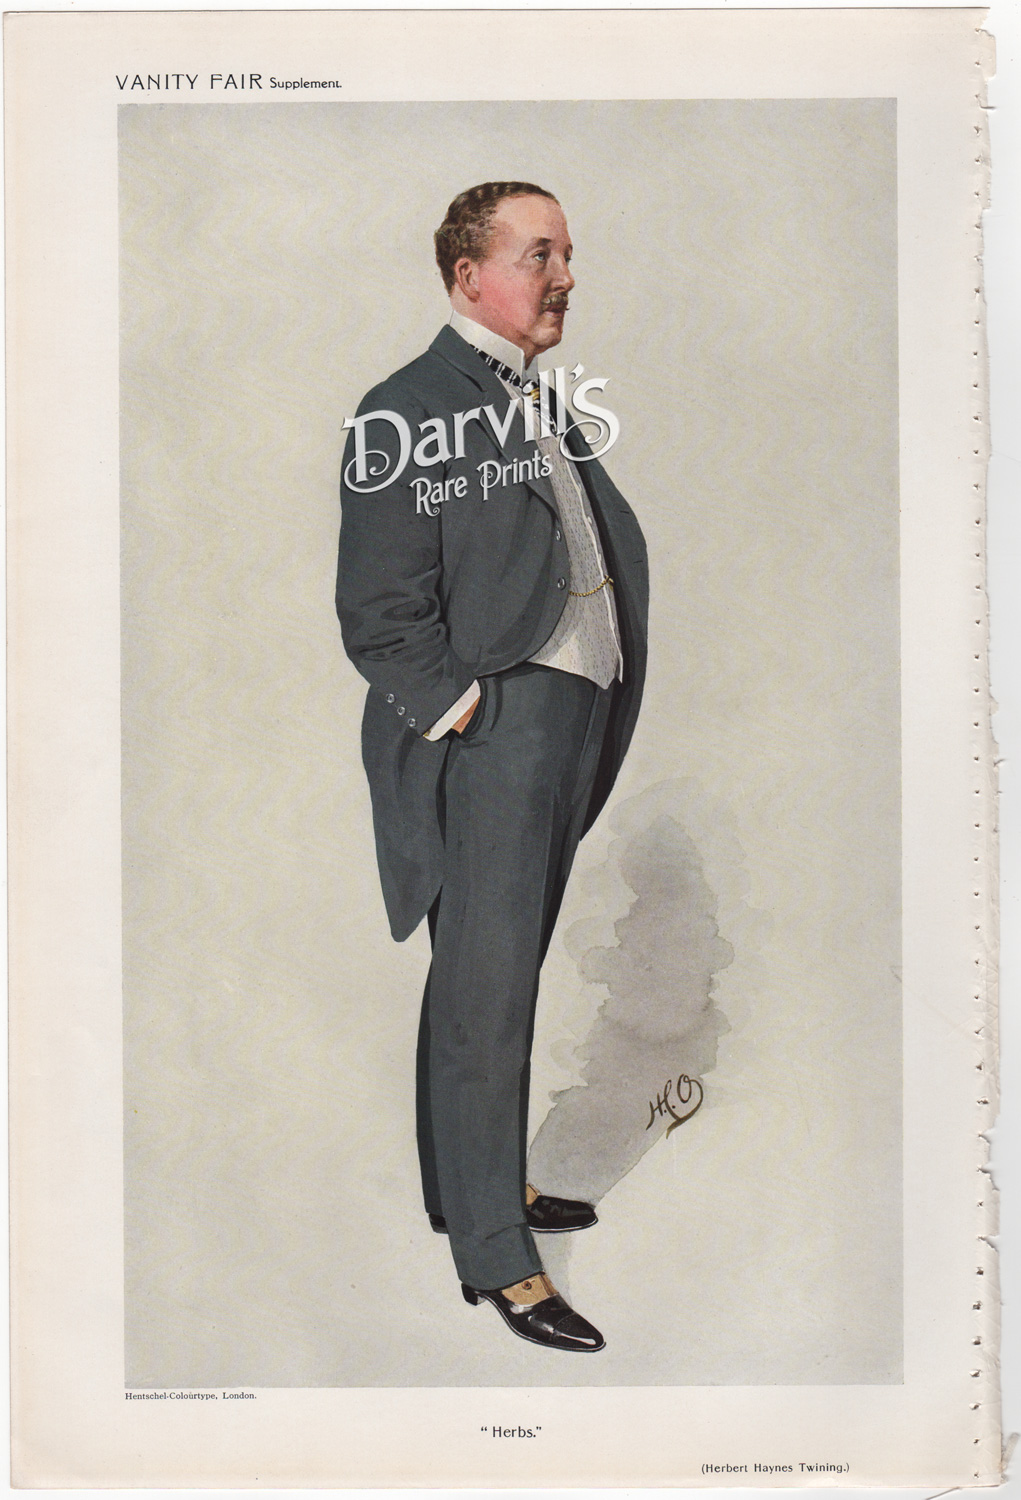 Herbert Haynes Twining Feb 17 1910